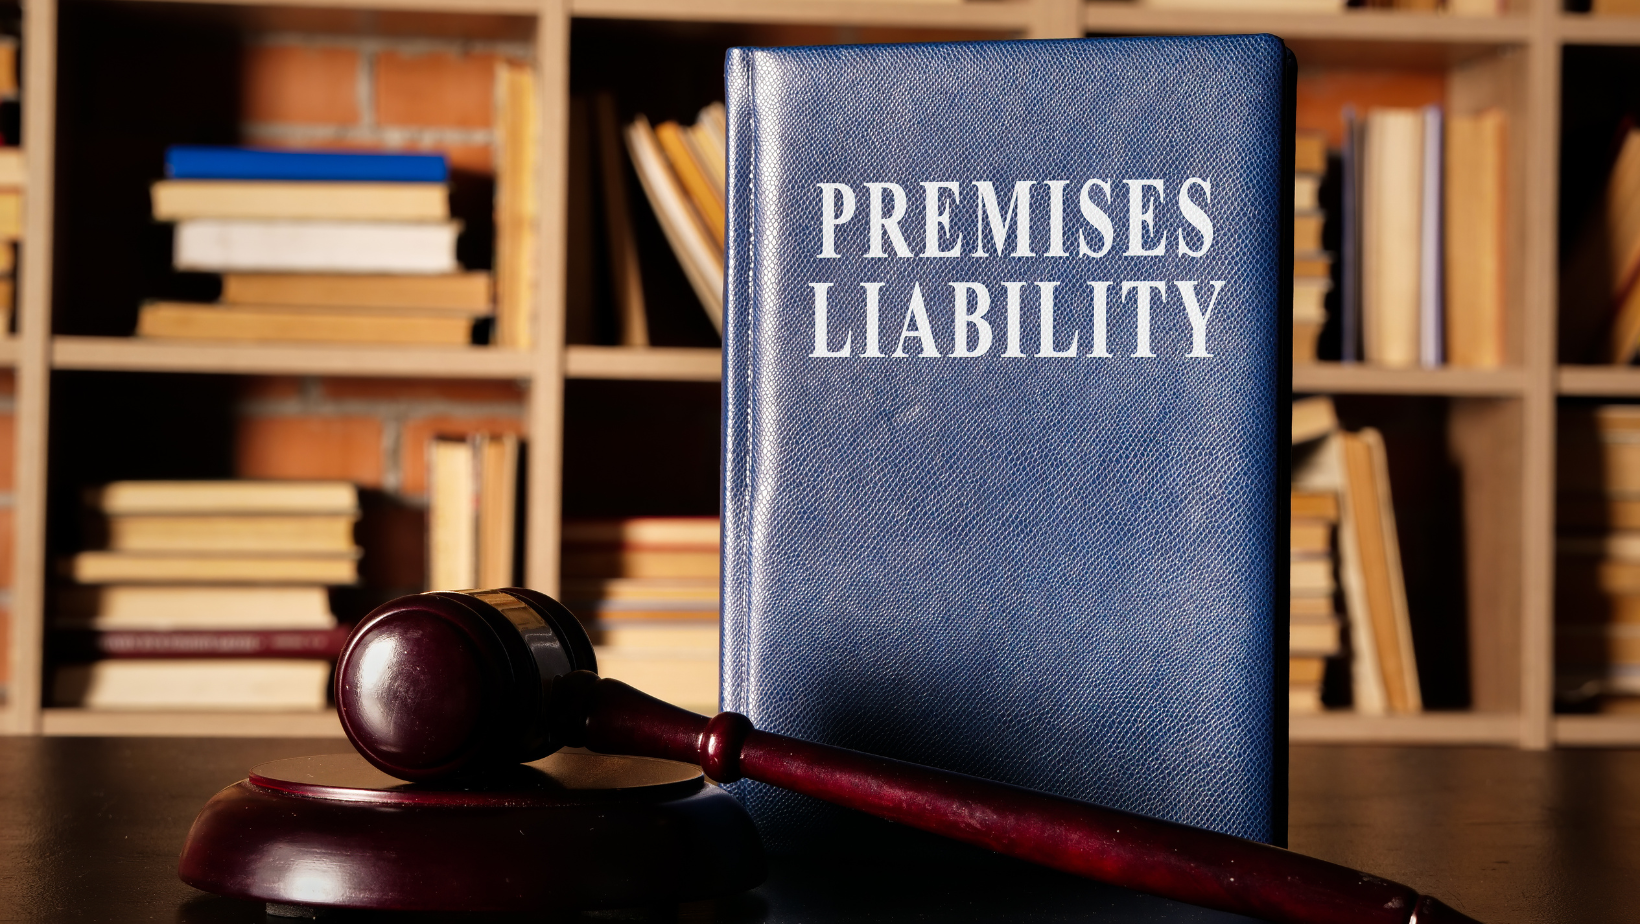 Understanding premises liability